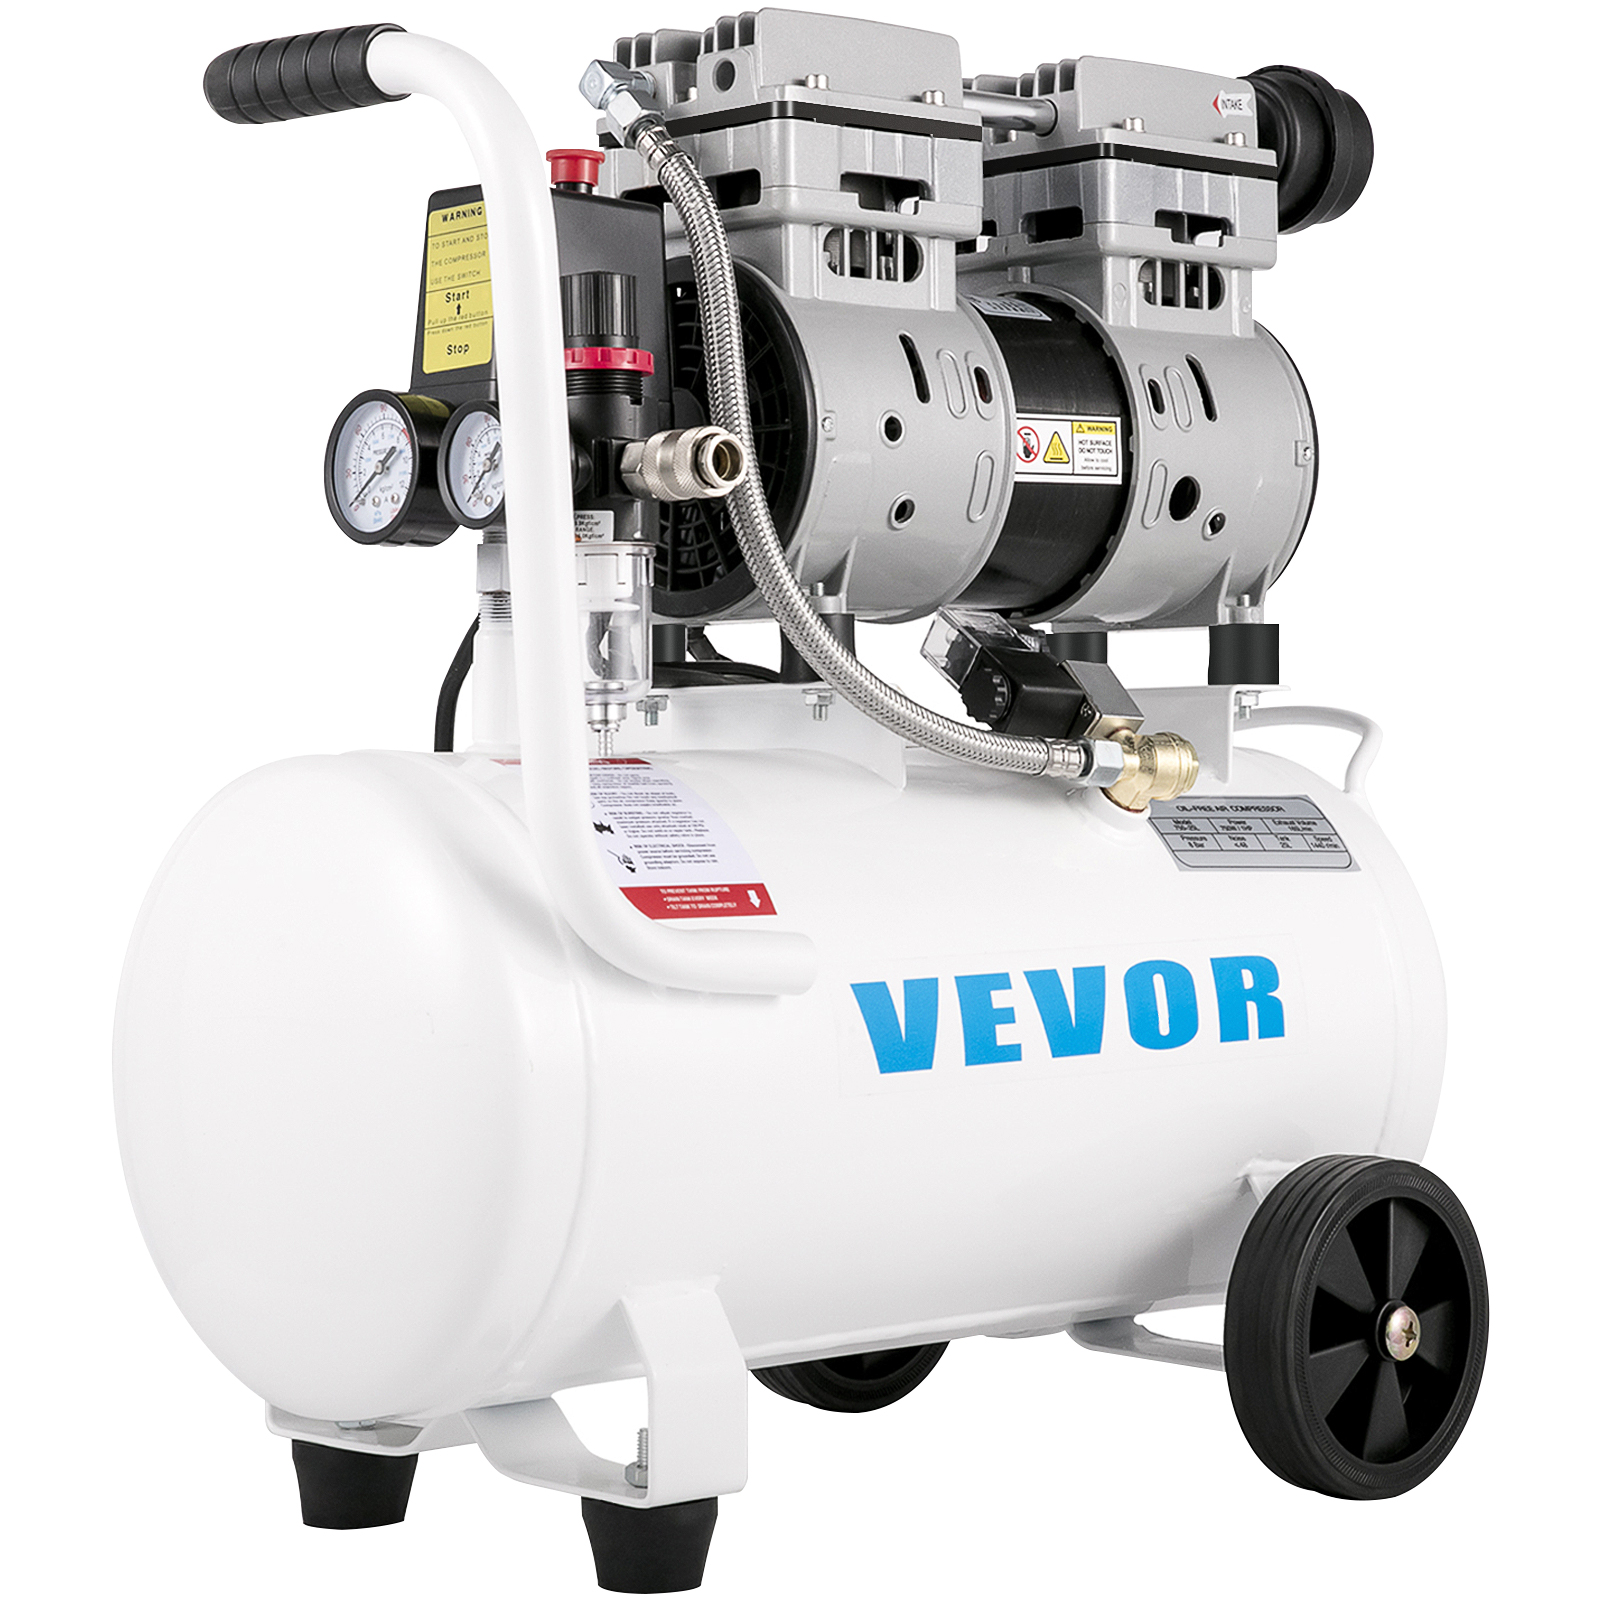 VEVOR Oil Free Air Compressor Air Inflator 750W w/6.6 Gallon Tank Ultra Quiet от Vevor Many GEOs